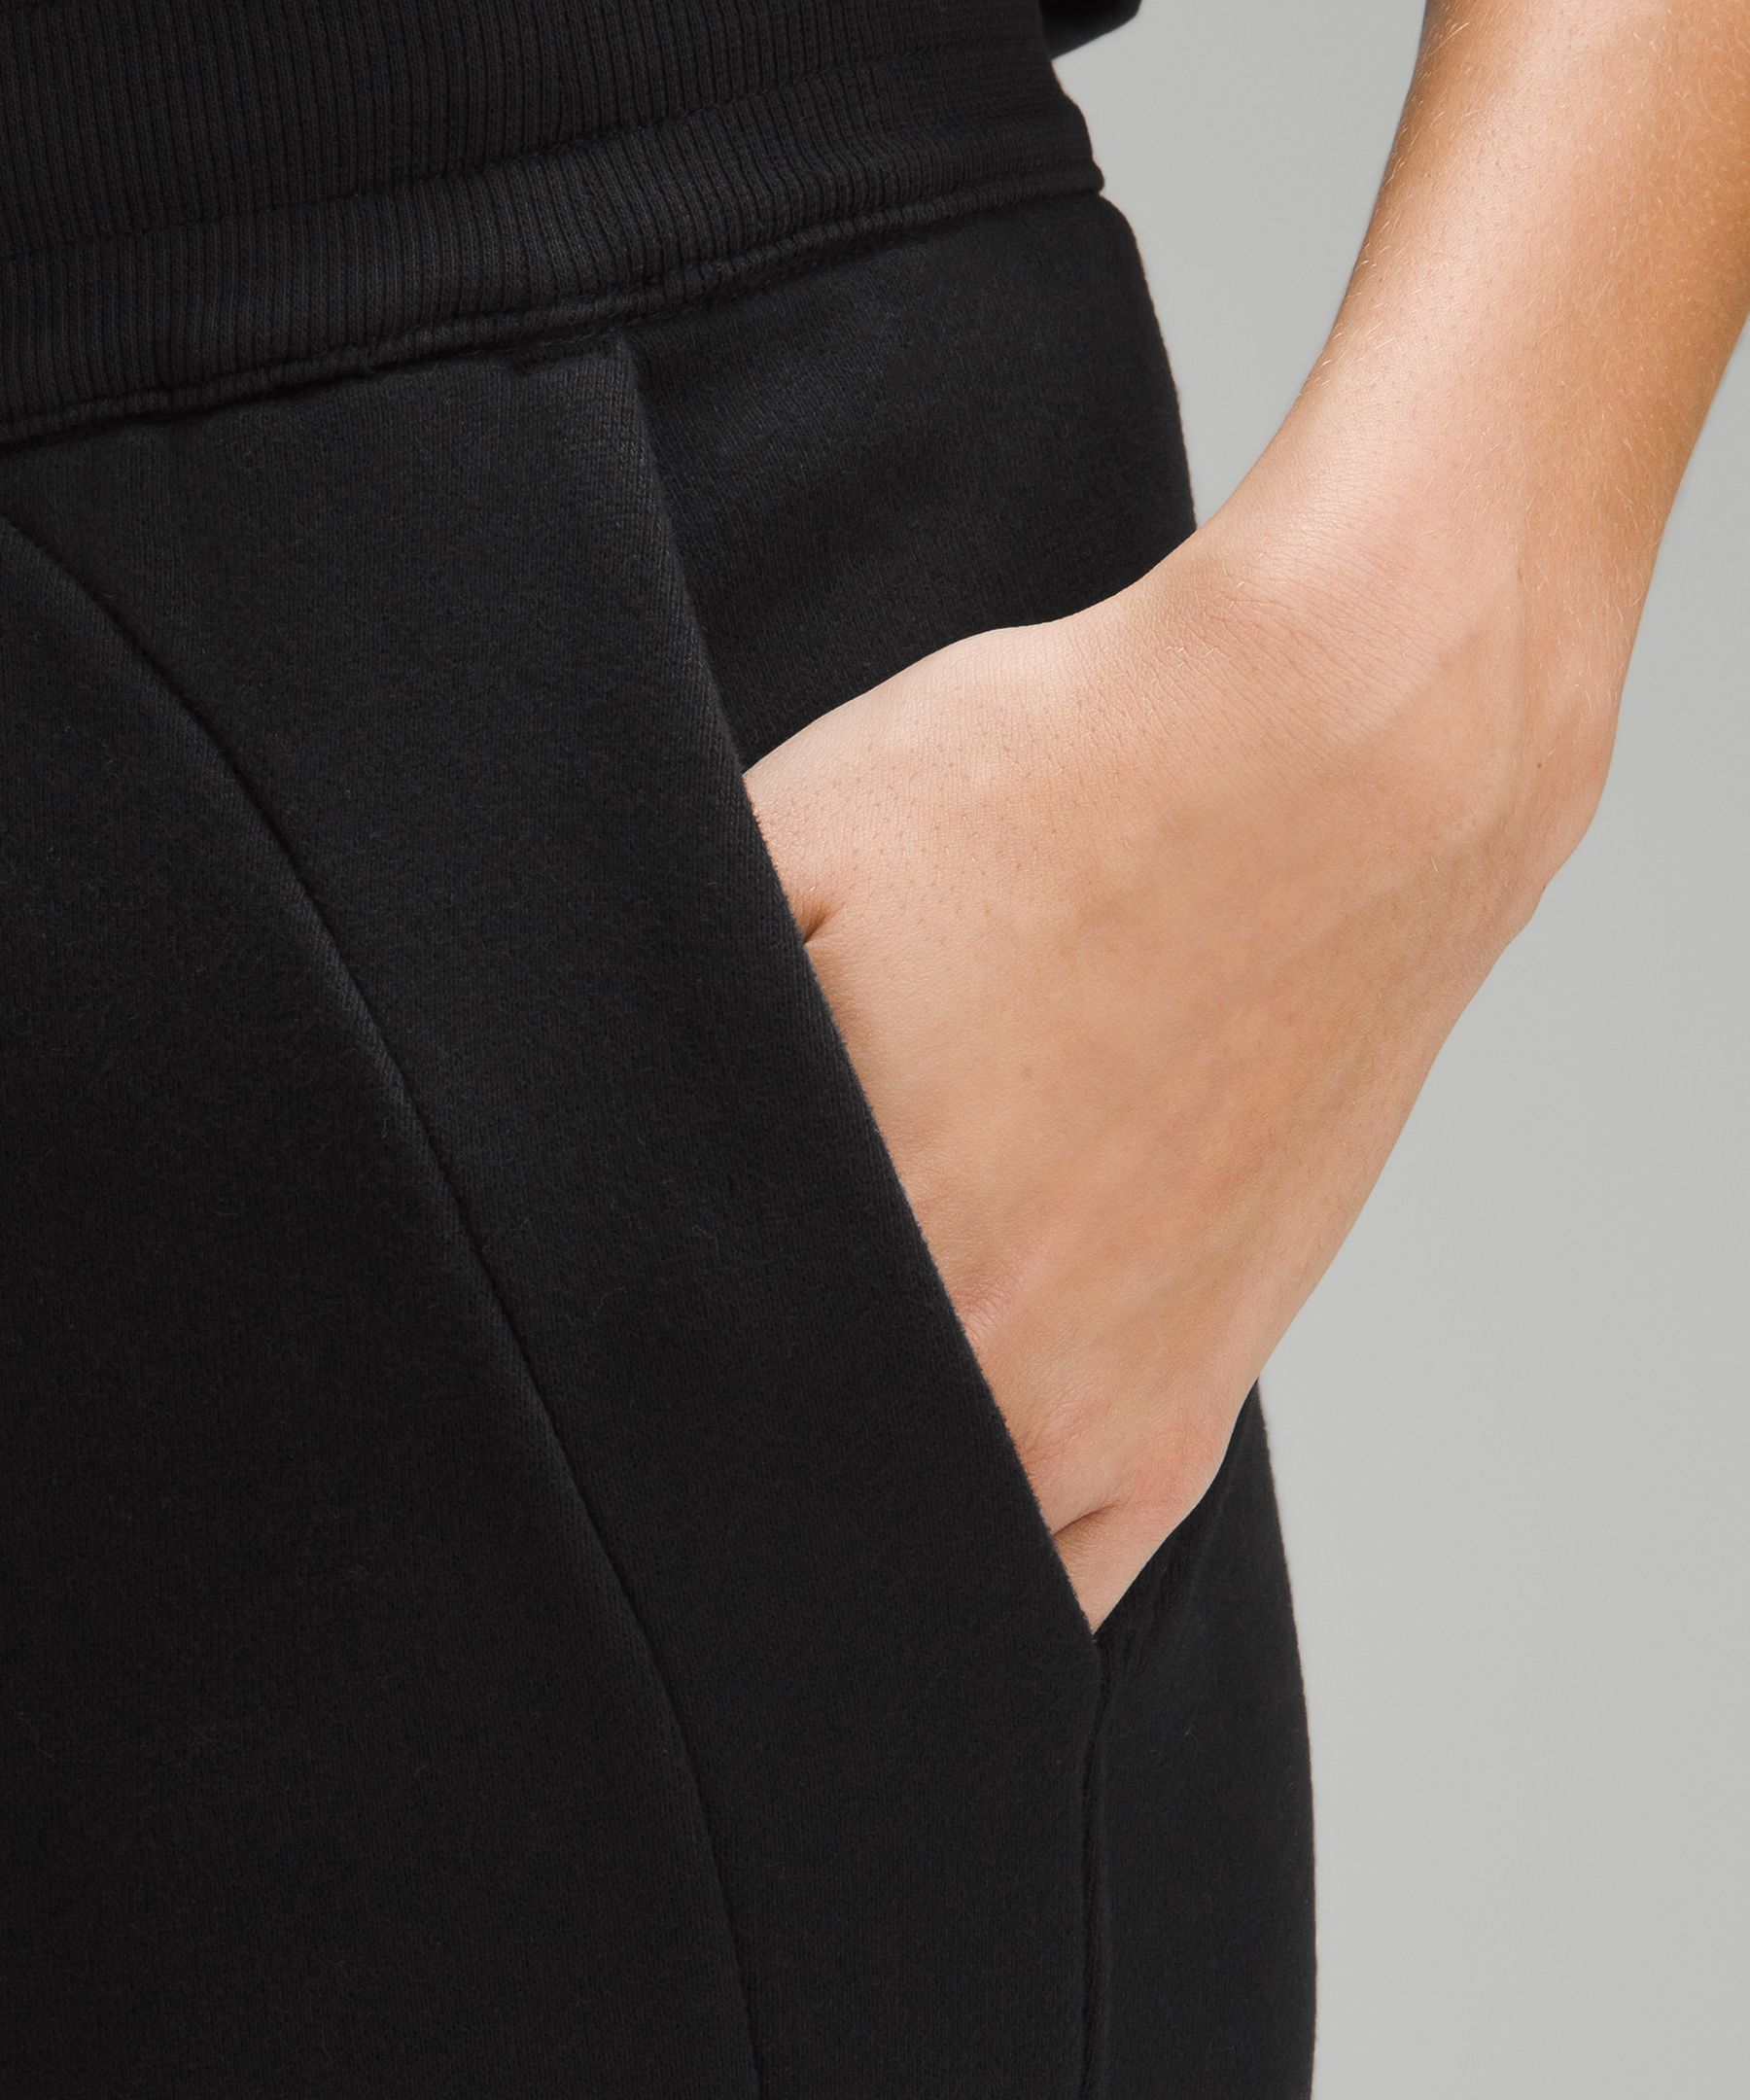 Lululemon Scuba High-Rise Joggers 7/8 Length - ShopStyle Activewear Pants